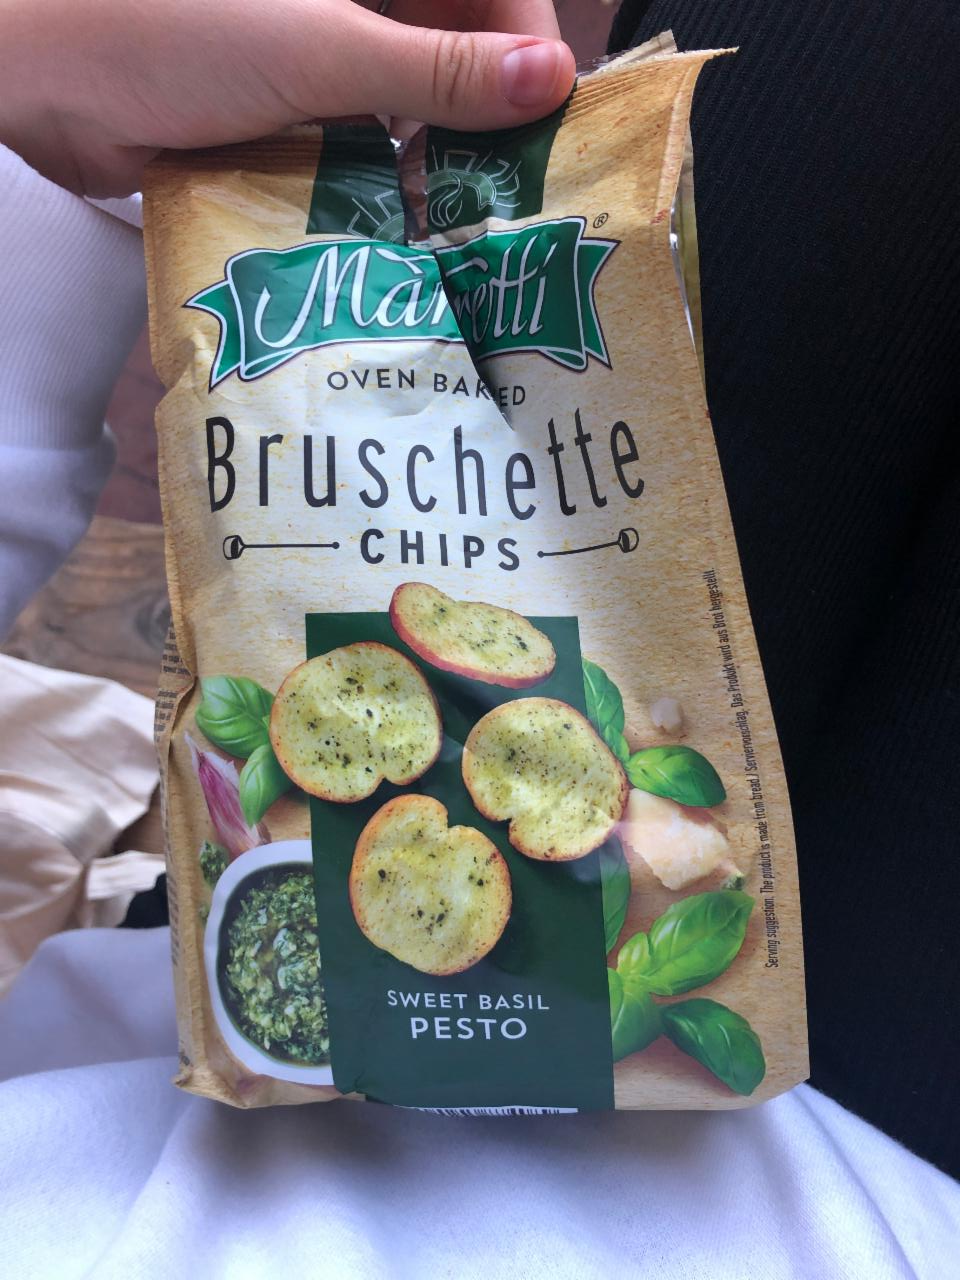 Фото - сухари из багета с песто Bruschette chips Pesto Maretti